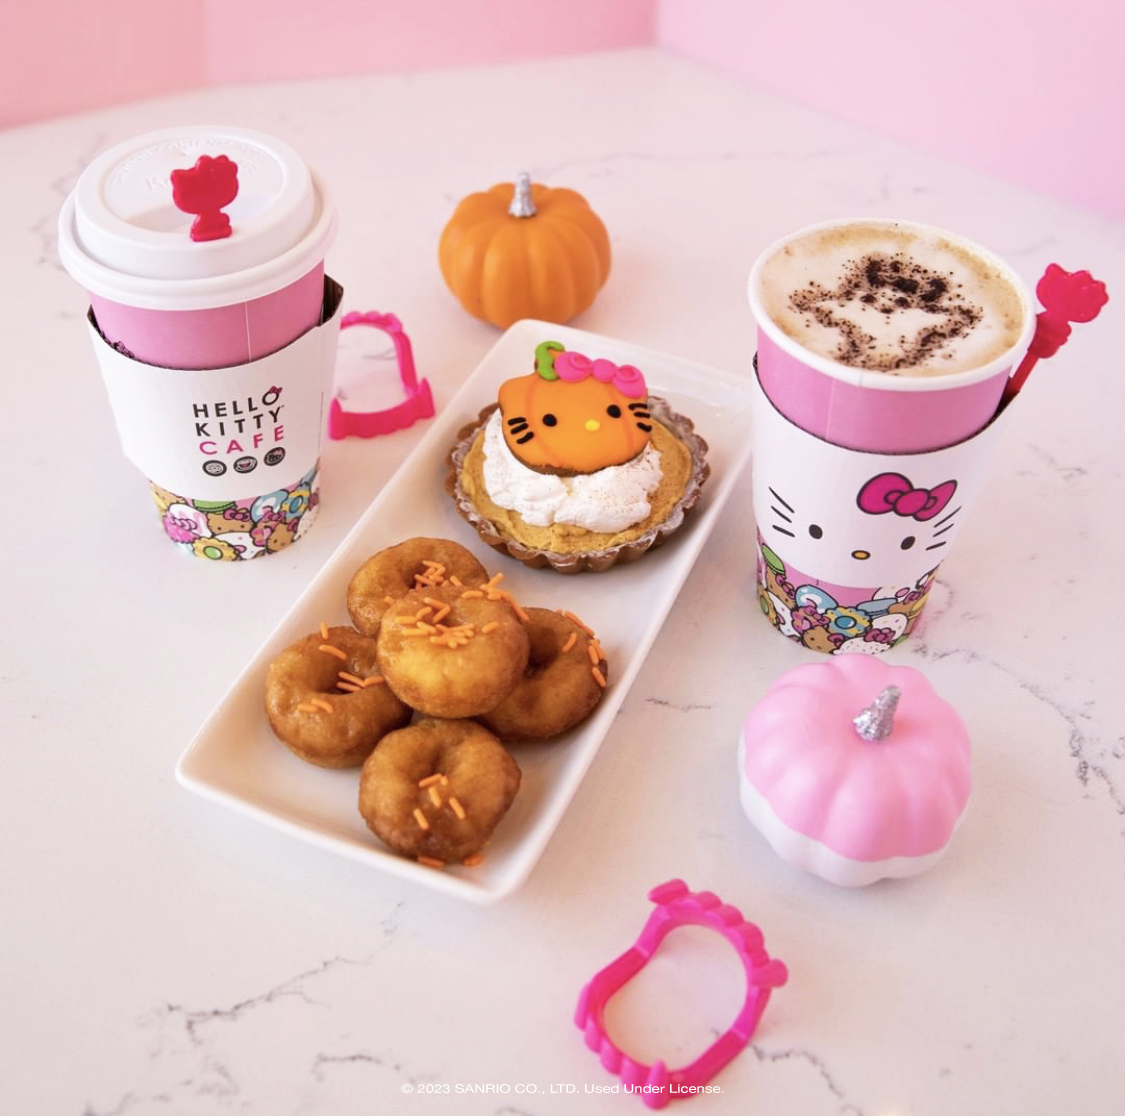 Hello Kitty Cafe Las Vegas - Take home a ✨supercute✨ Hello Kitty